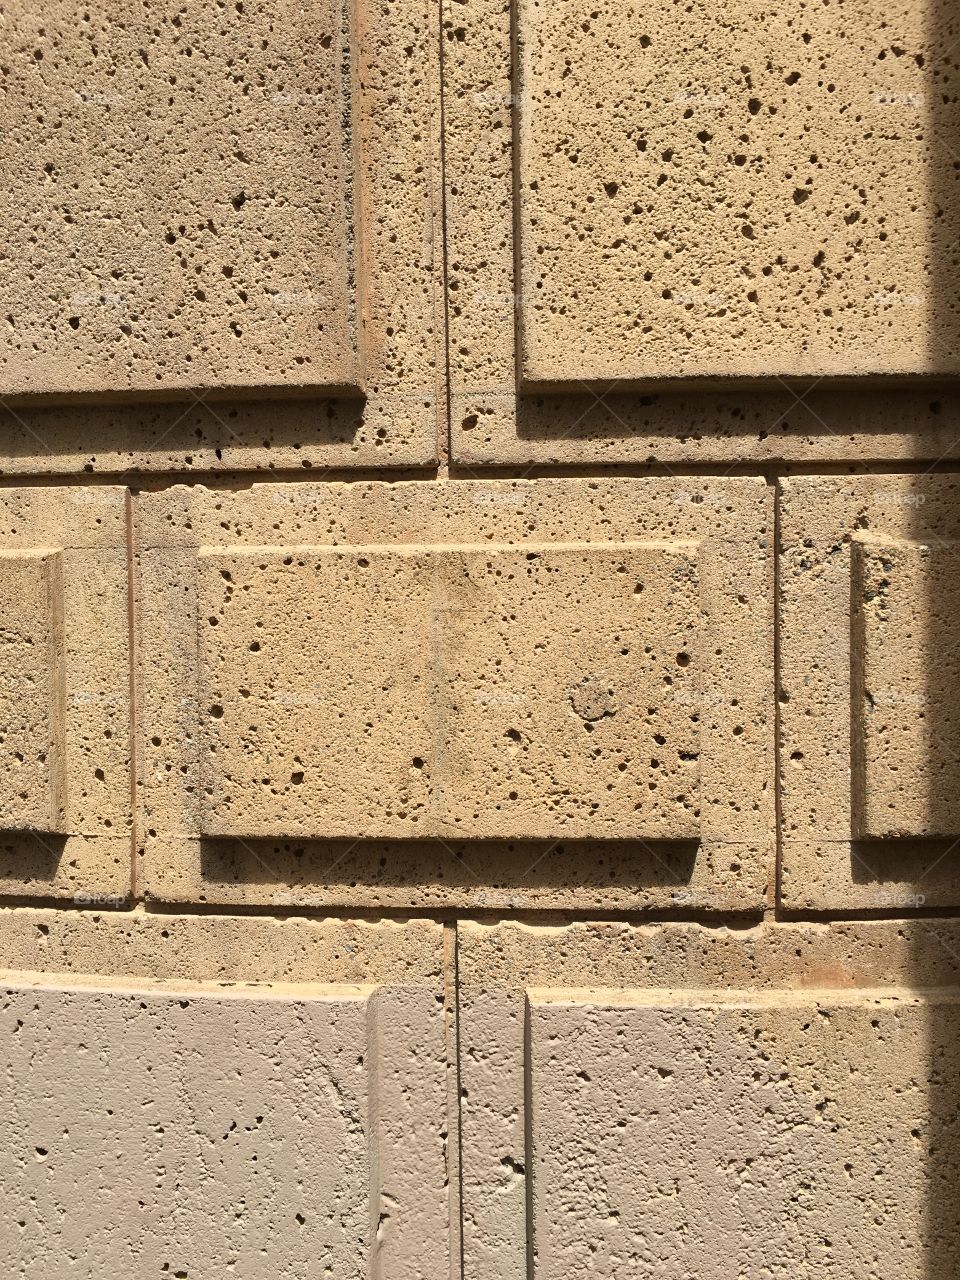 Bricks in a symmetrical pattern. 